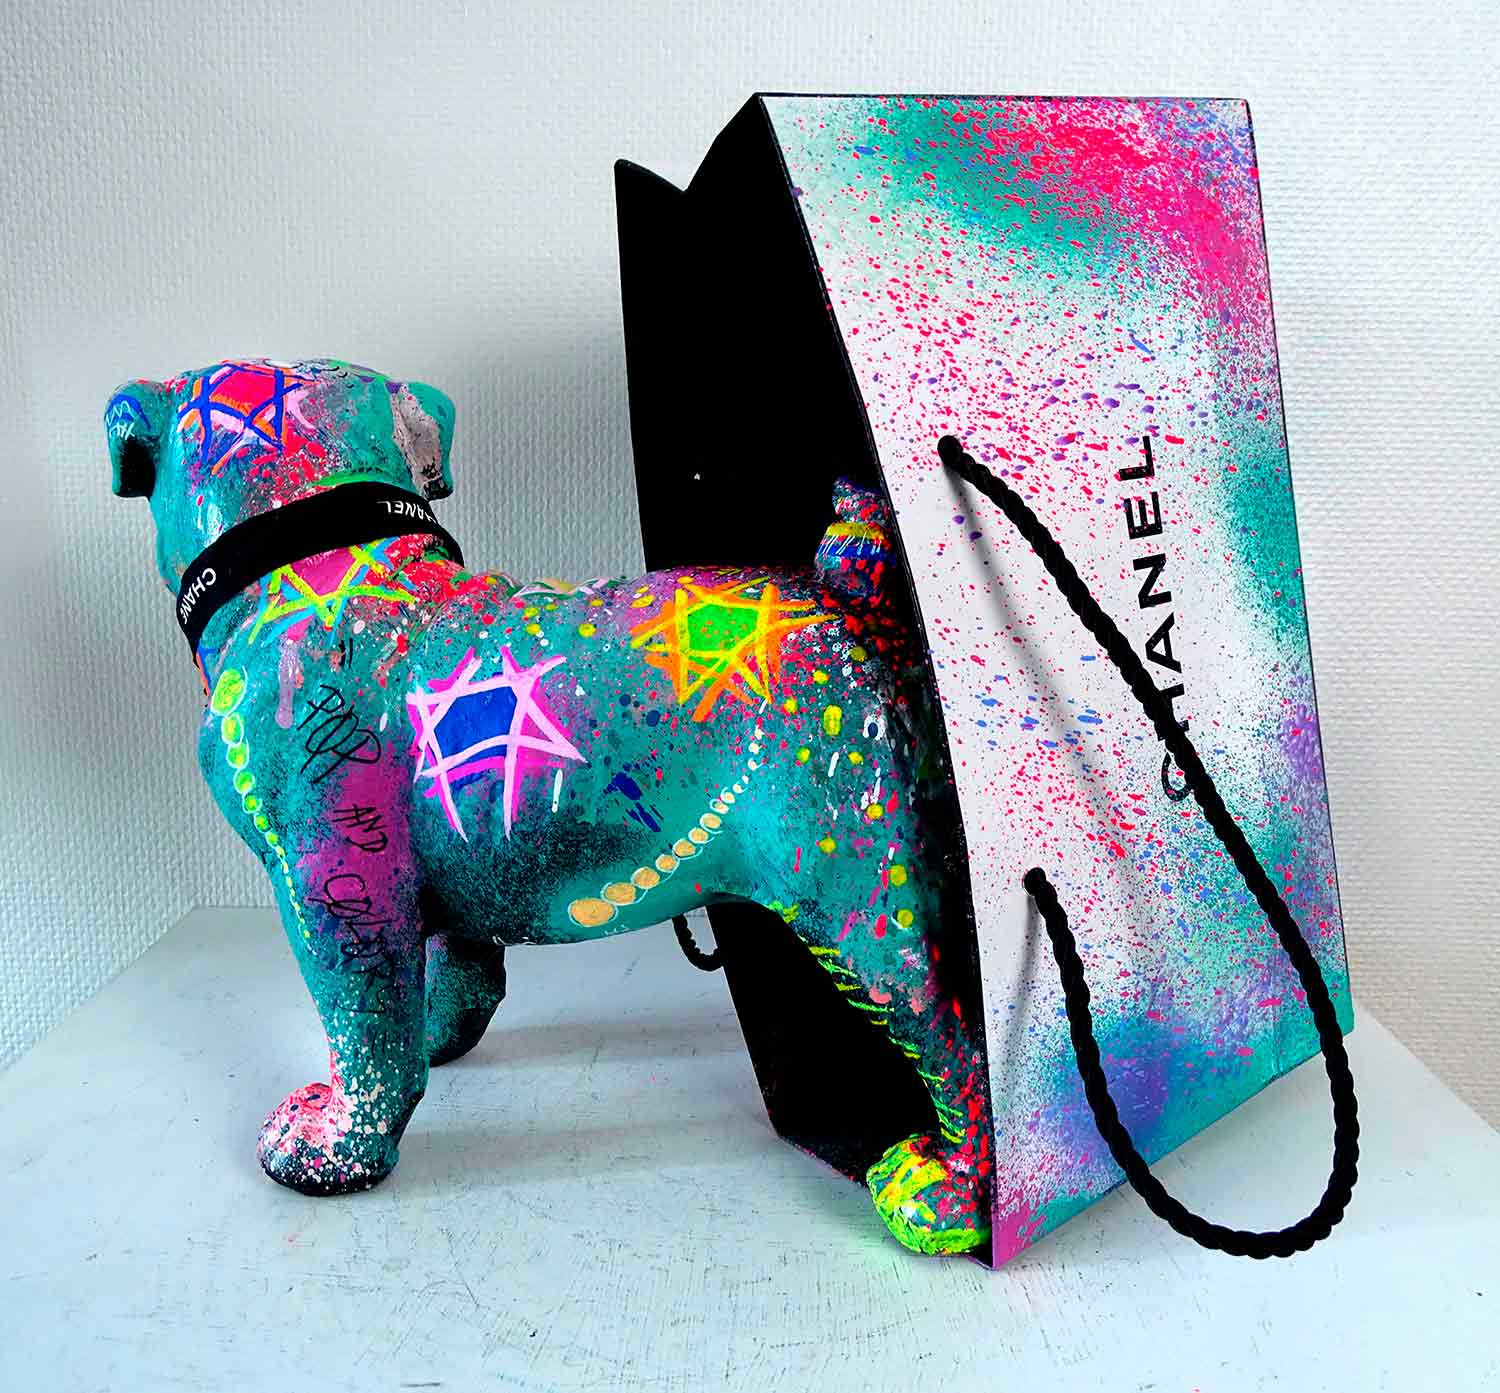 Sculpture Bulldog Pee Louis Vuitton Pop , Sculpture by Priscilla Vettese